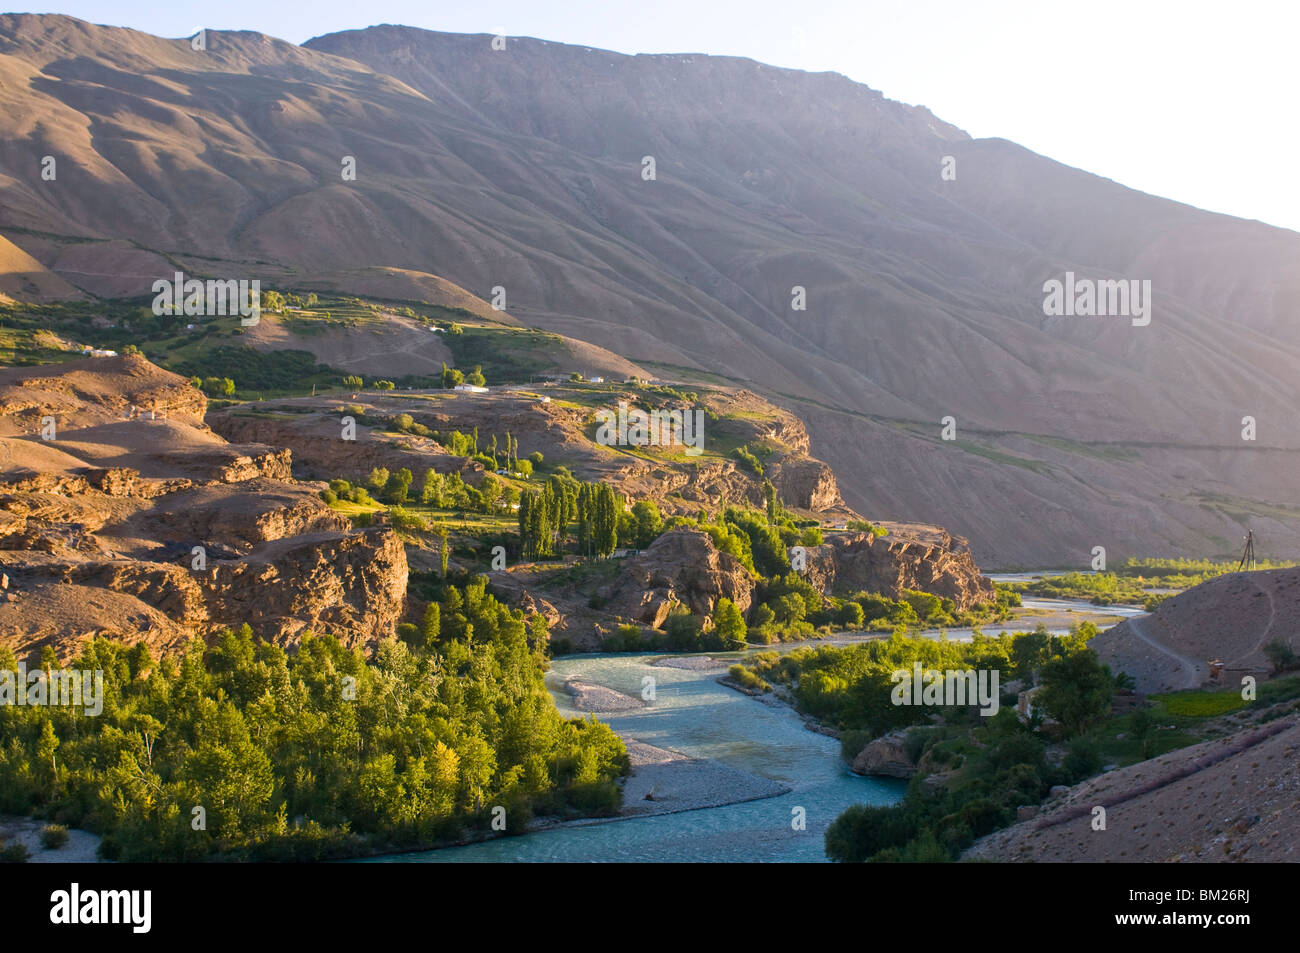 Shokh Dara Valley at sunset, Tajikistan, Central Asia Stock Photo